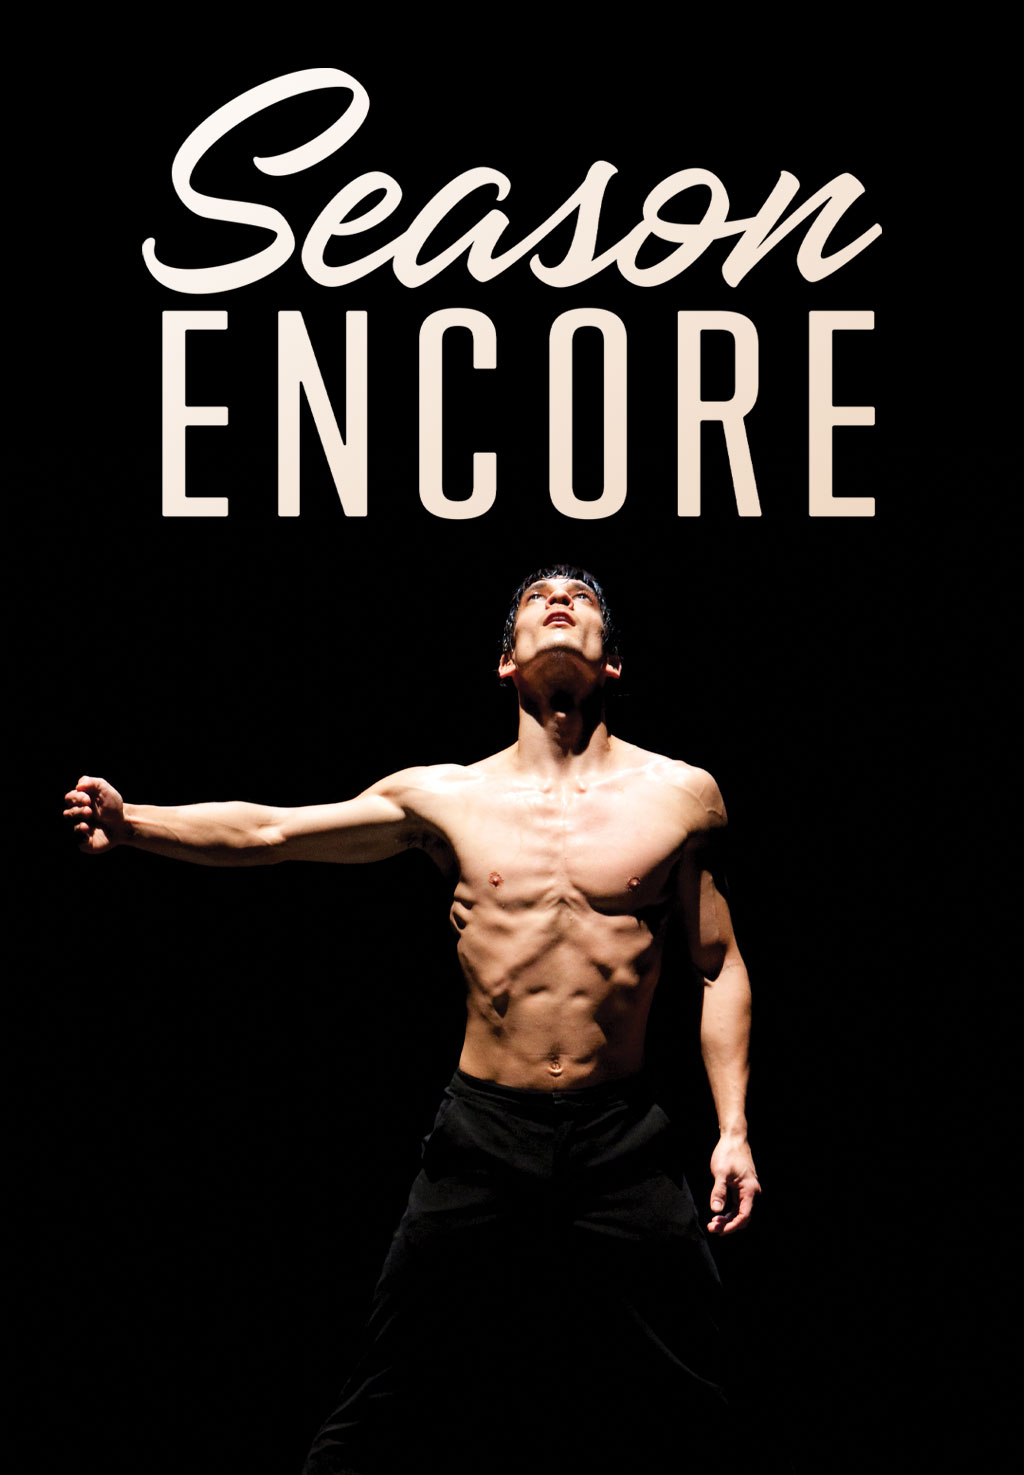 Season Encore On Sale Now